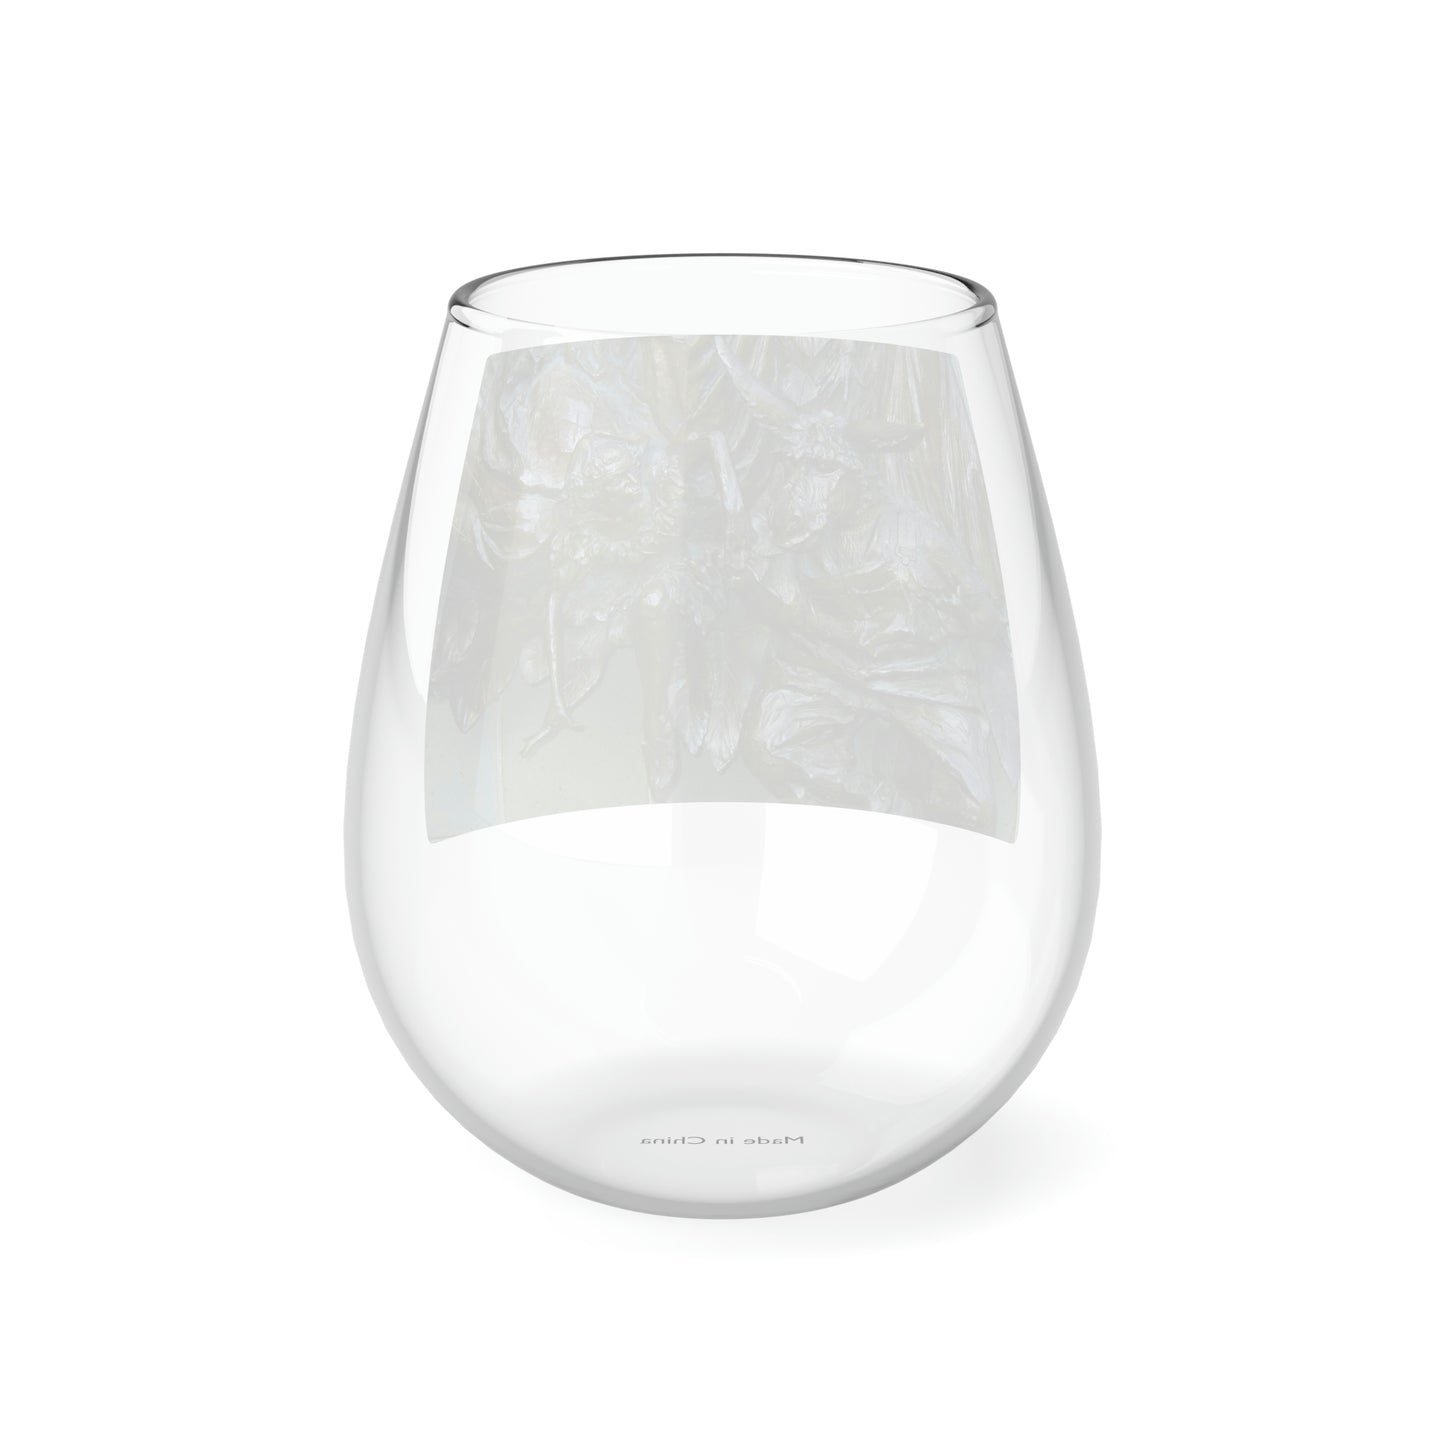 Flight Love - Stemless Wine Glass, 11.75 oz - Fry1Productions